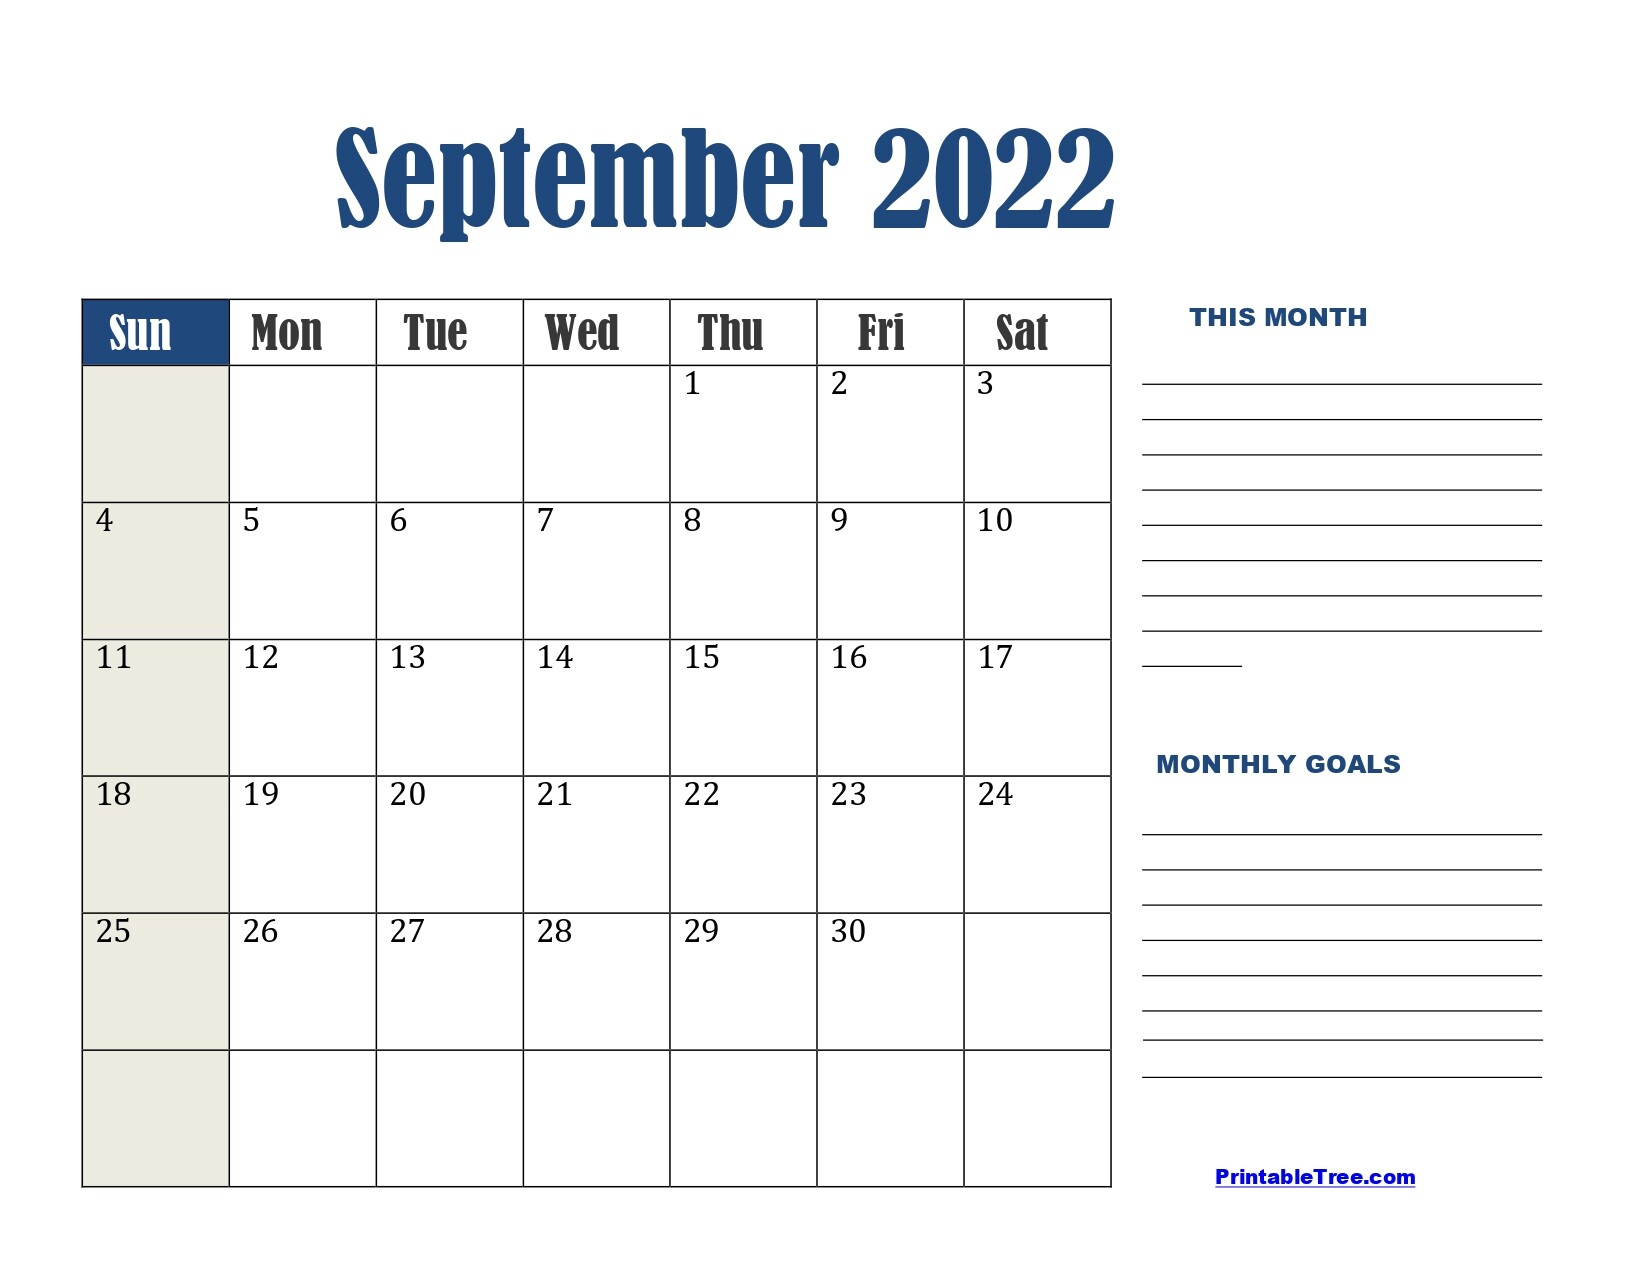 printable-tree-free-september-2022-printable-calendar-templates